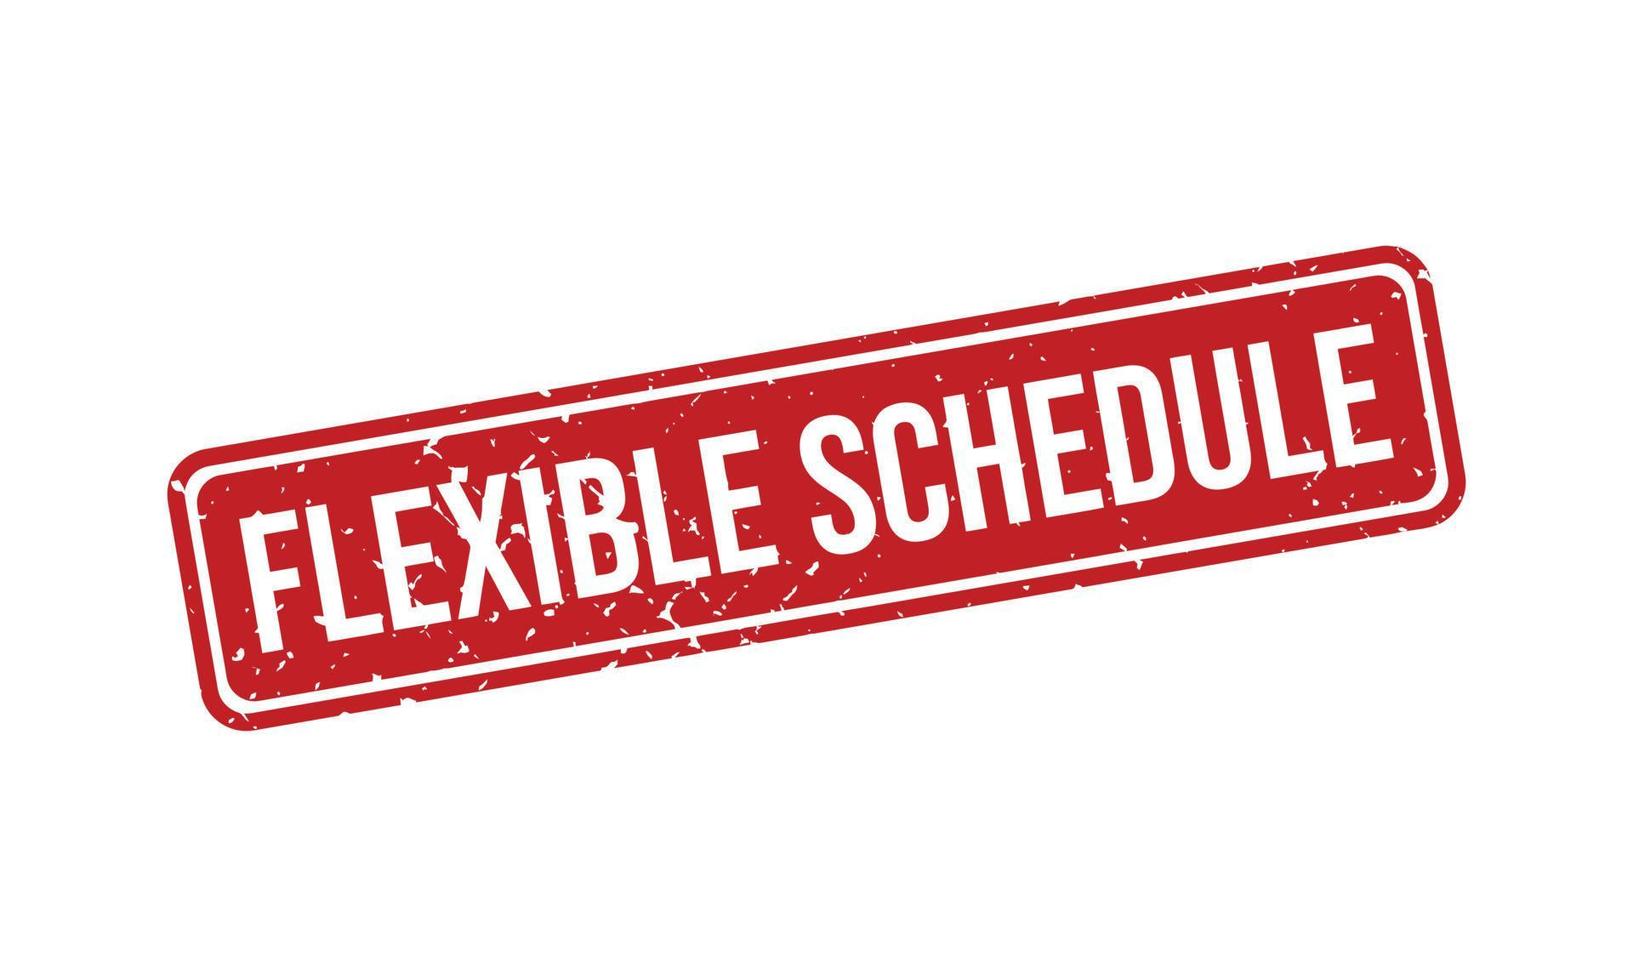 Flexible Schedule Rubber Stamp. Flexible Schedule Grunge Stamp Seal Vector Illustration